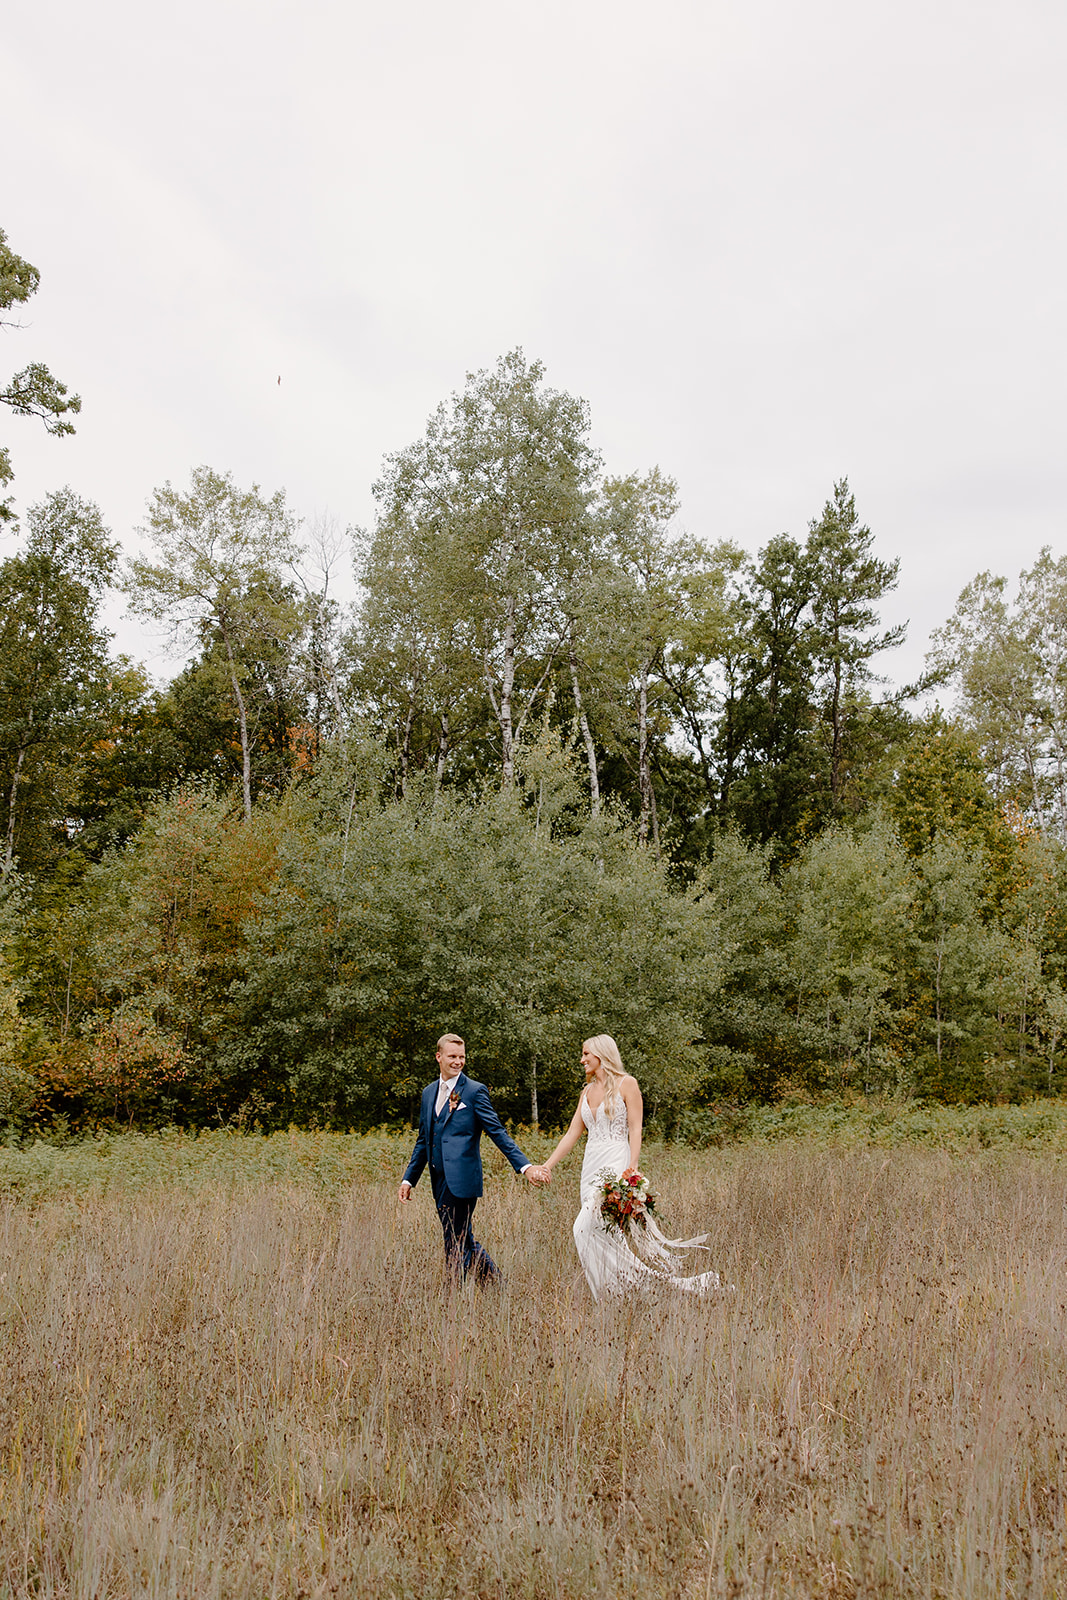 Bride and groom walk through a field of grass